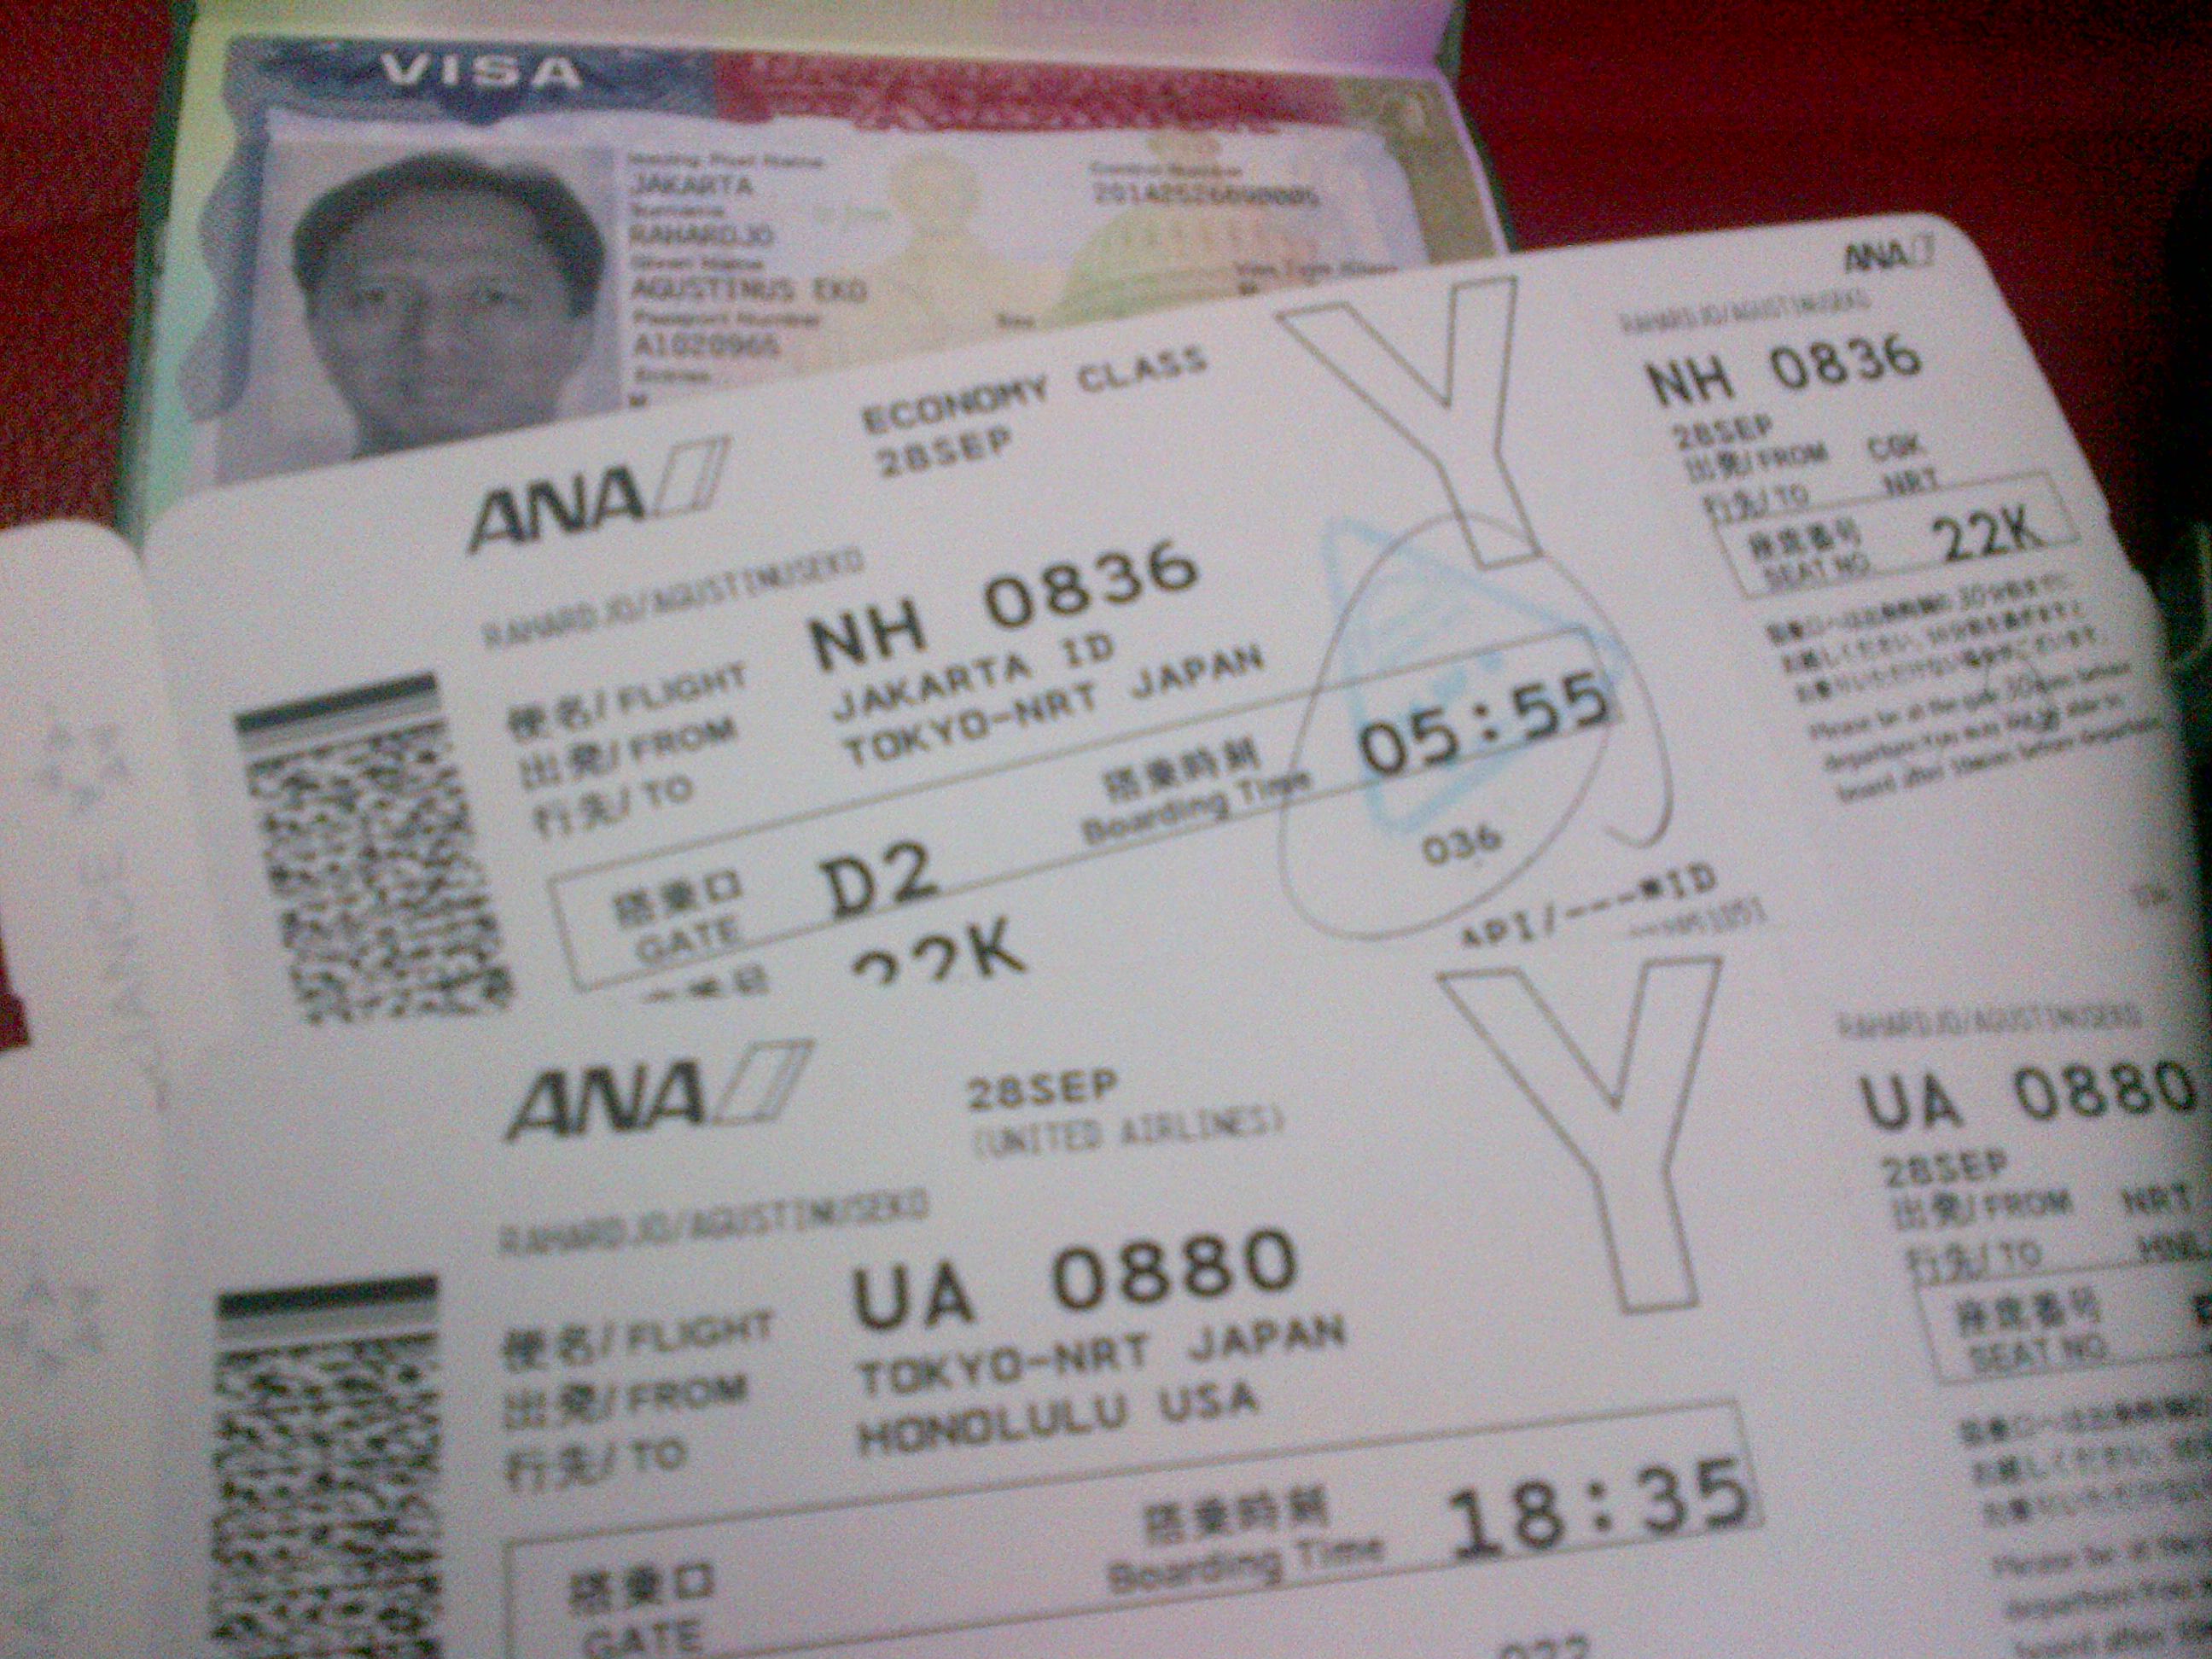 Tiket Jakarta-Tokyo-Honolulu dan visa AS untuk kali kedua. Lancarkan semua, ya Tuhan.